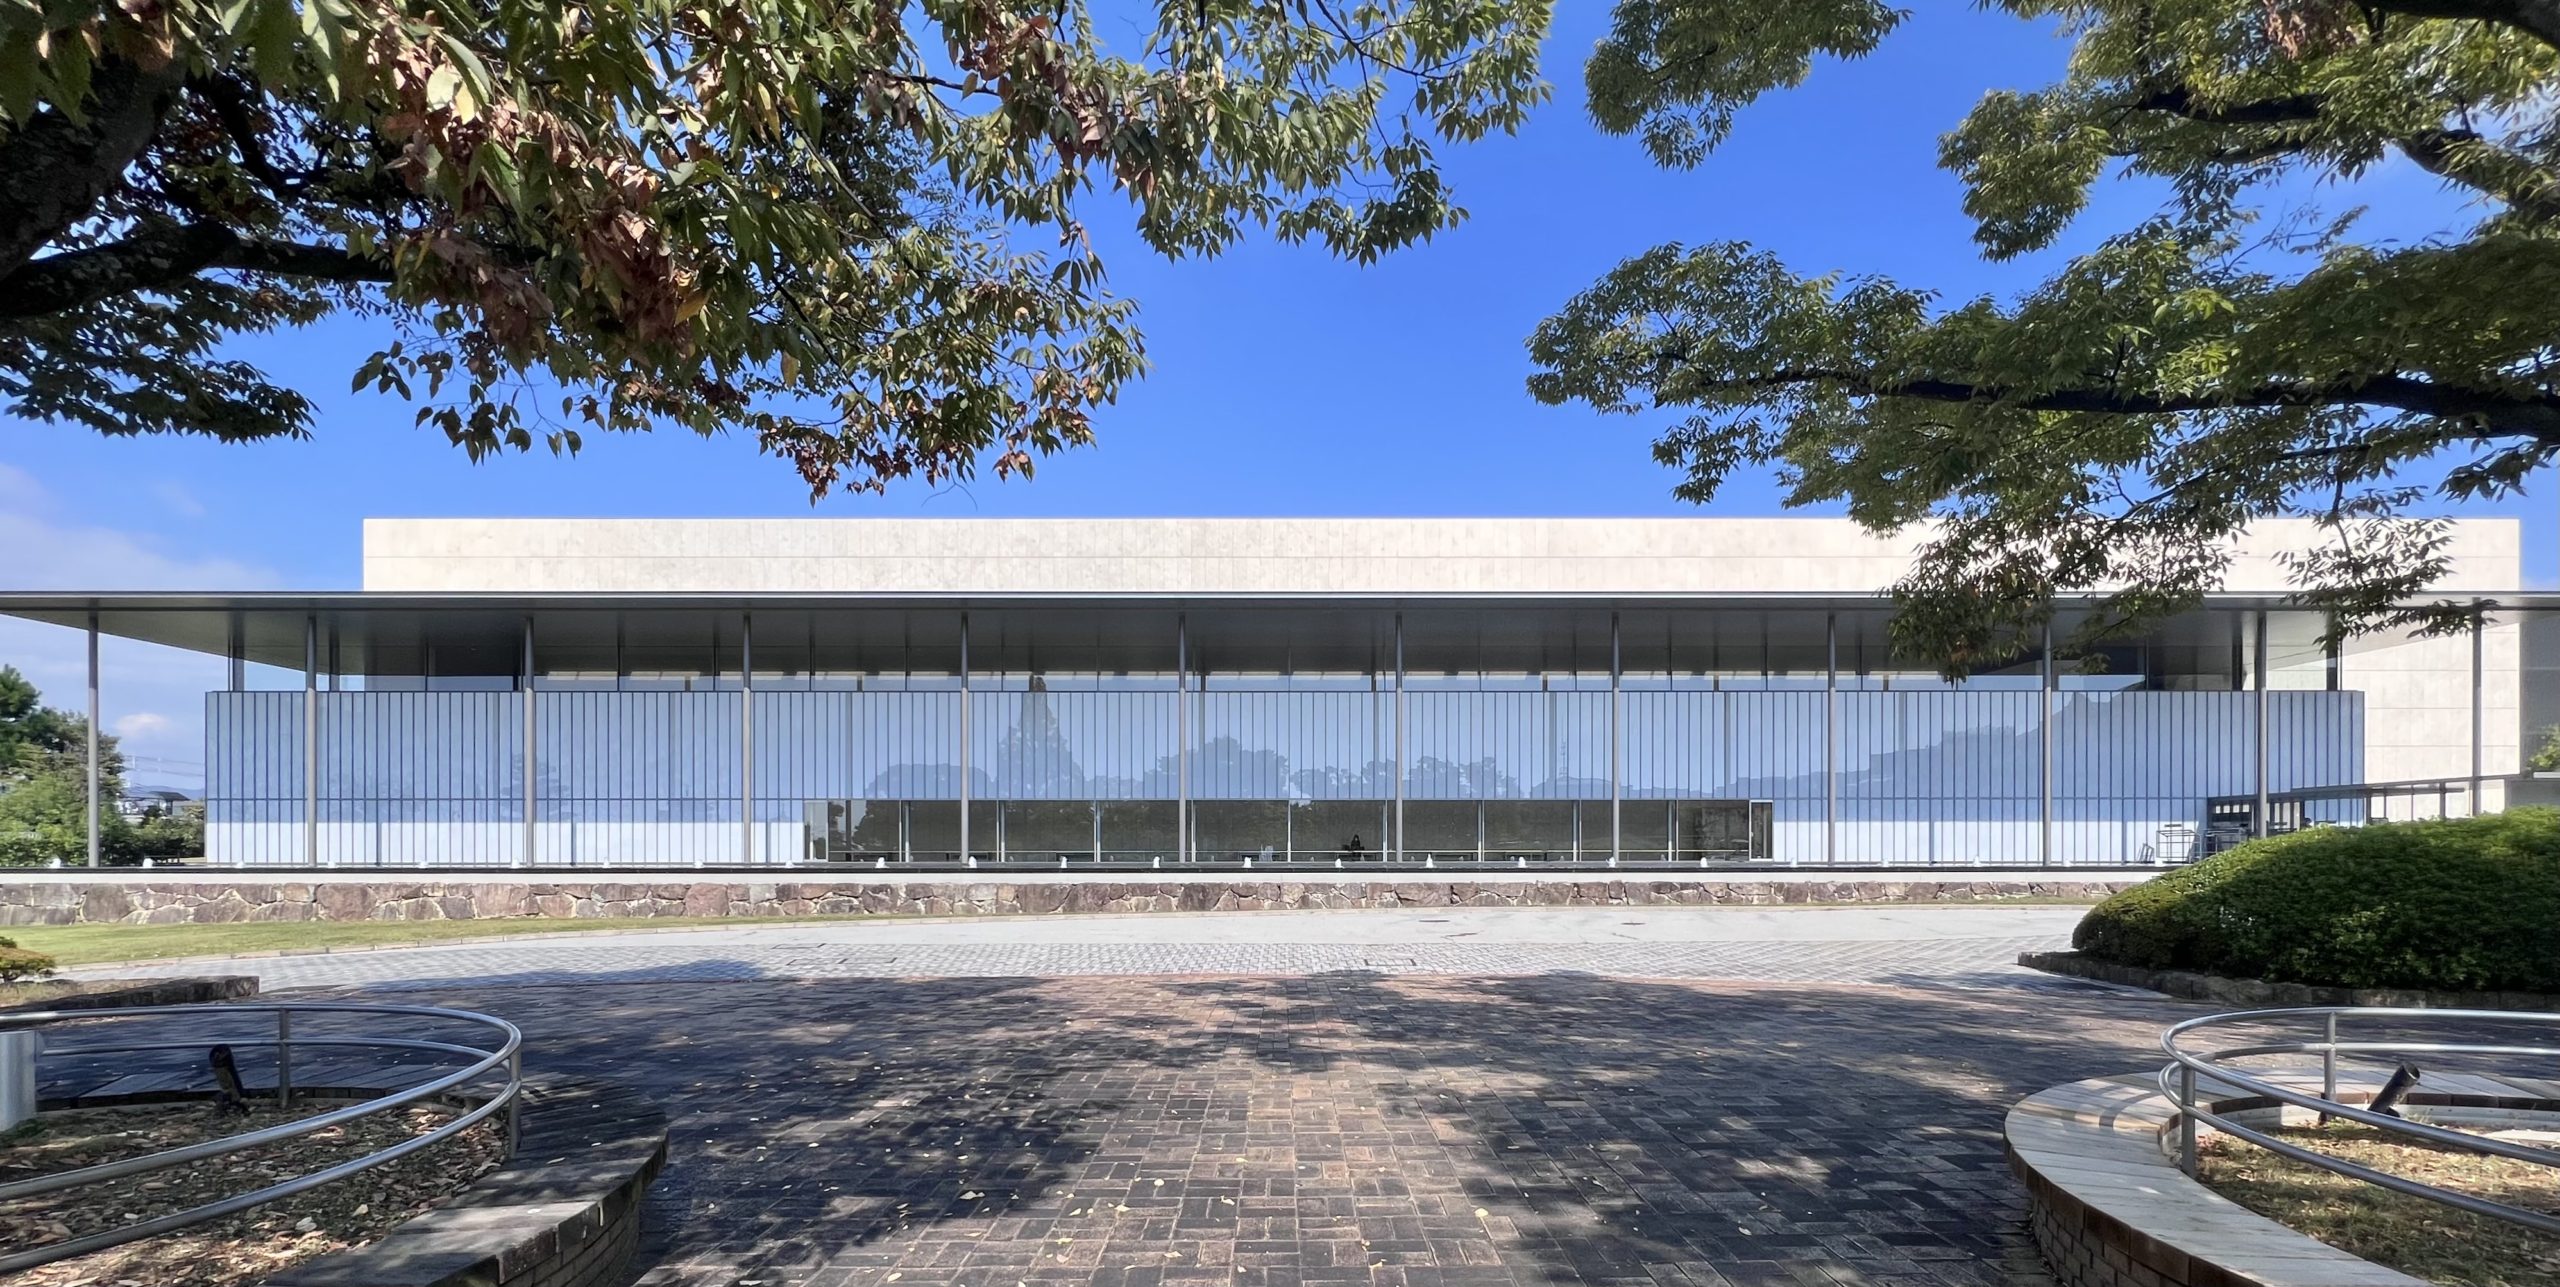 「京都国立博物館 平成知新館」をご紹介します。日本的空間構成の近代建築！谷口吉生建築設計研究所